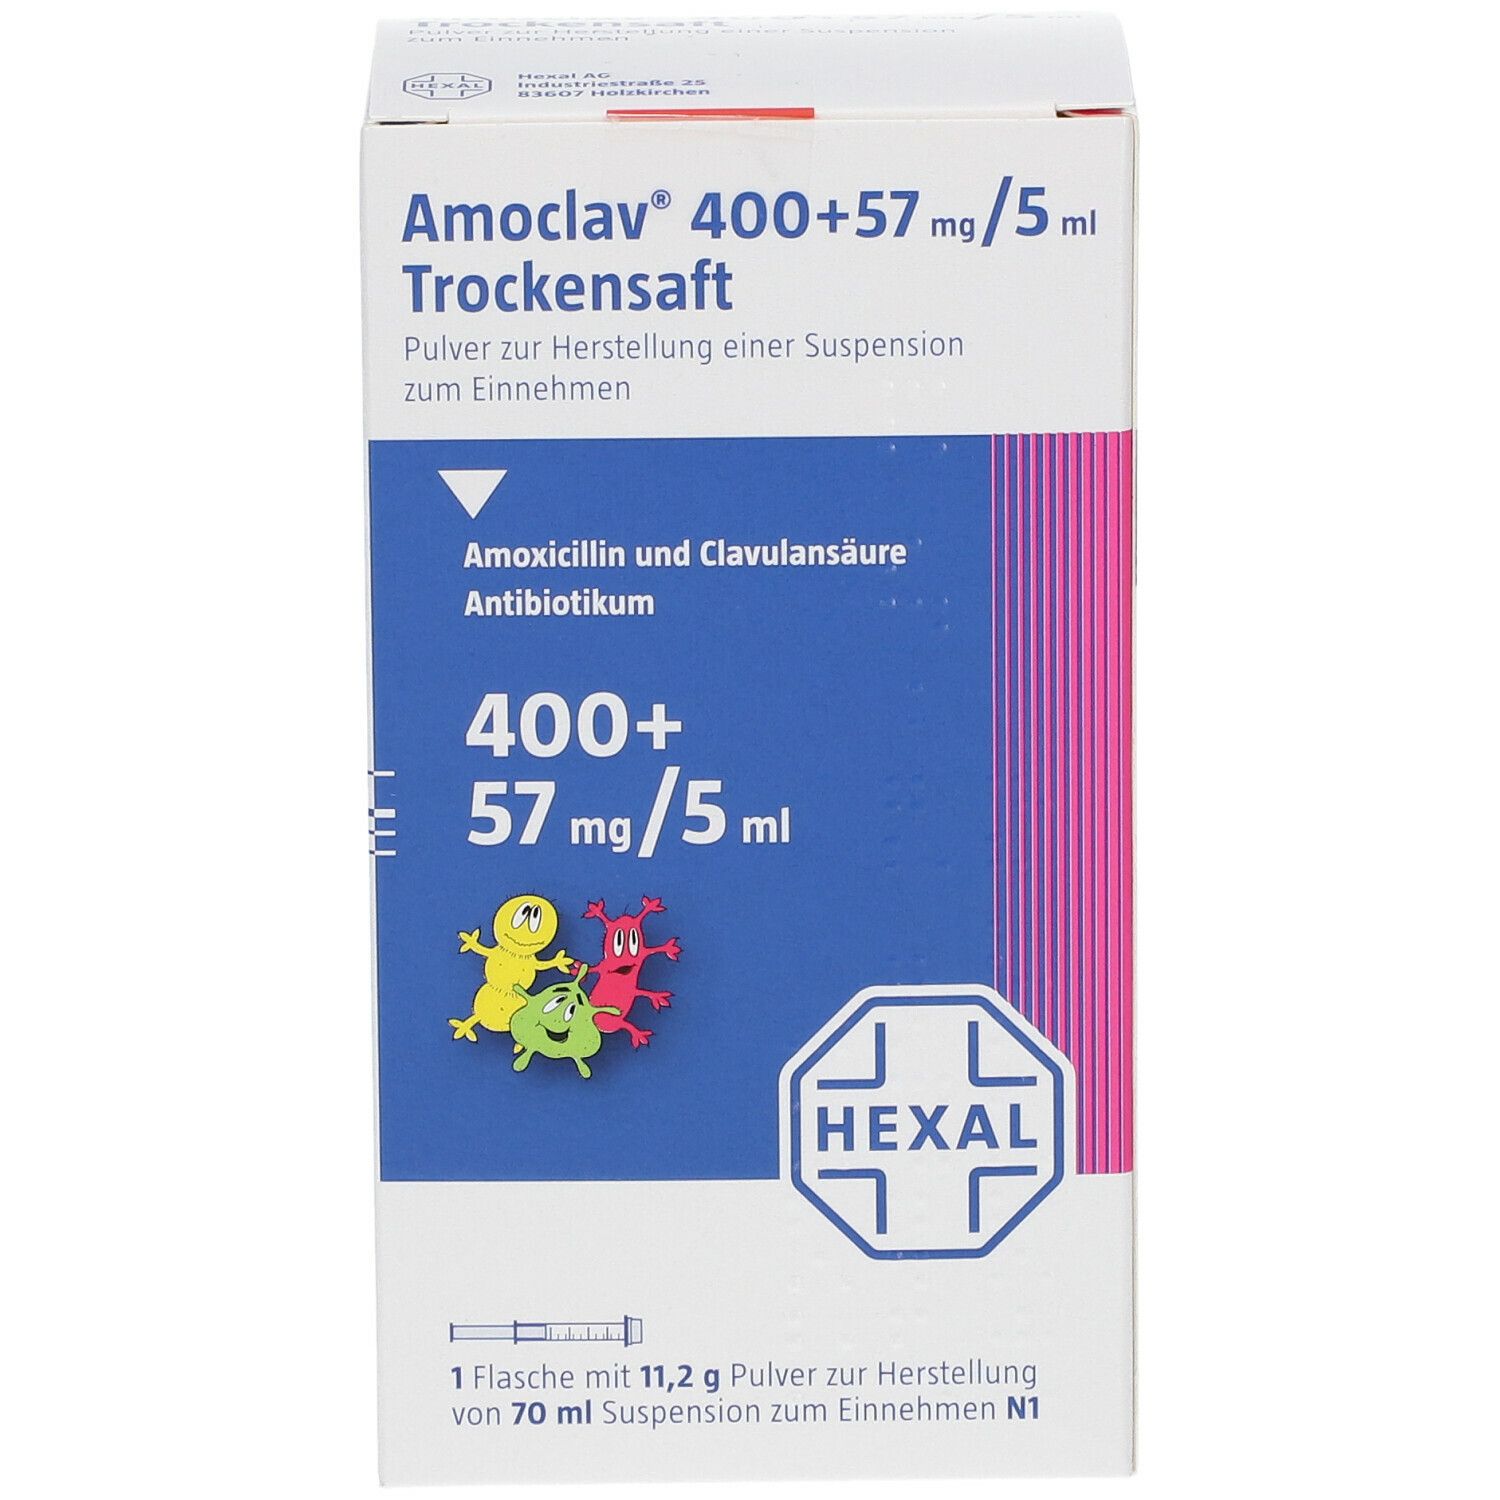 Amoclav® 400 mg + 57 mg/5 ml Trockensaft